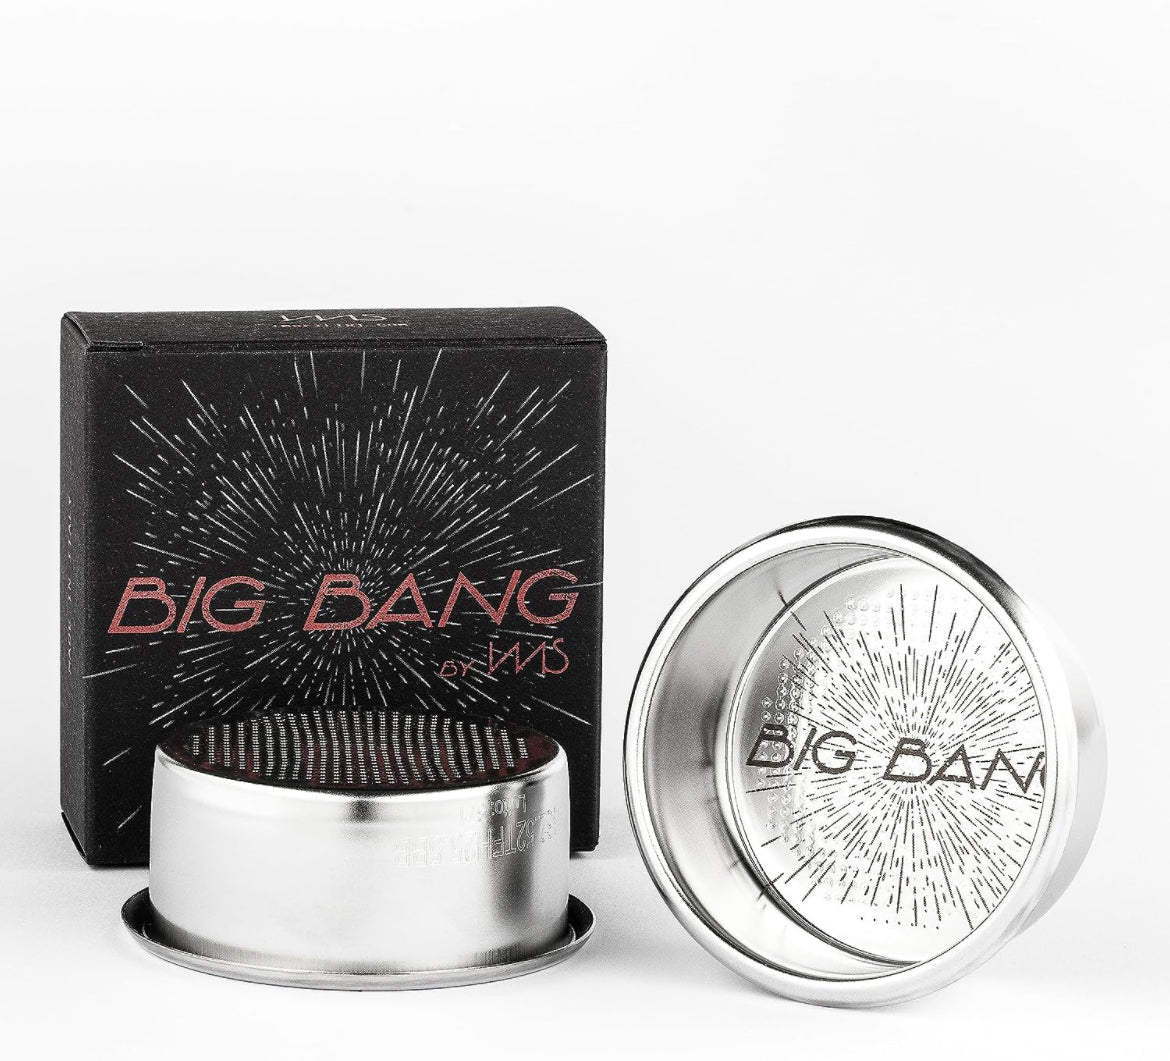 IMS Big Bang Präzisions-Filterkorb für 58 mm Siebträger 25.5 mm hoch - Coffee Coaching Club